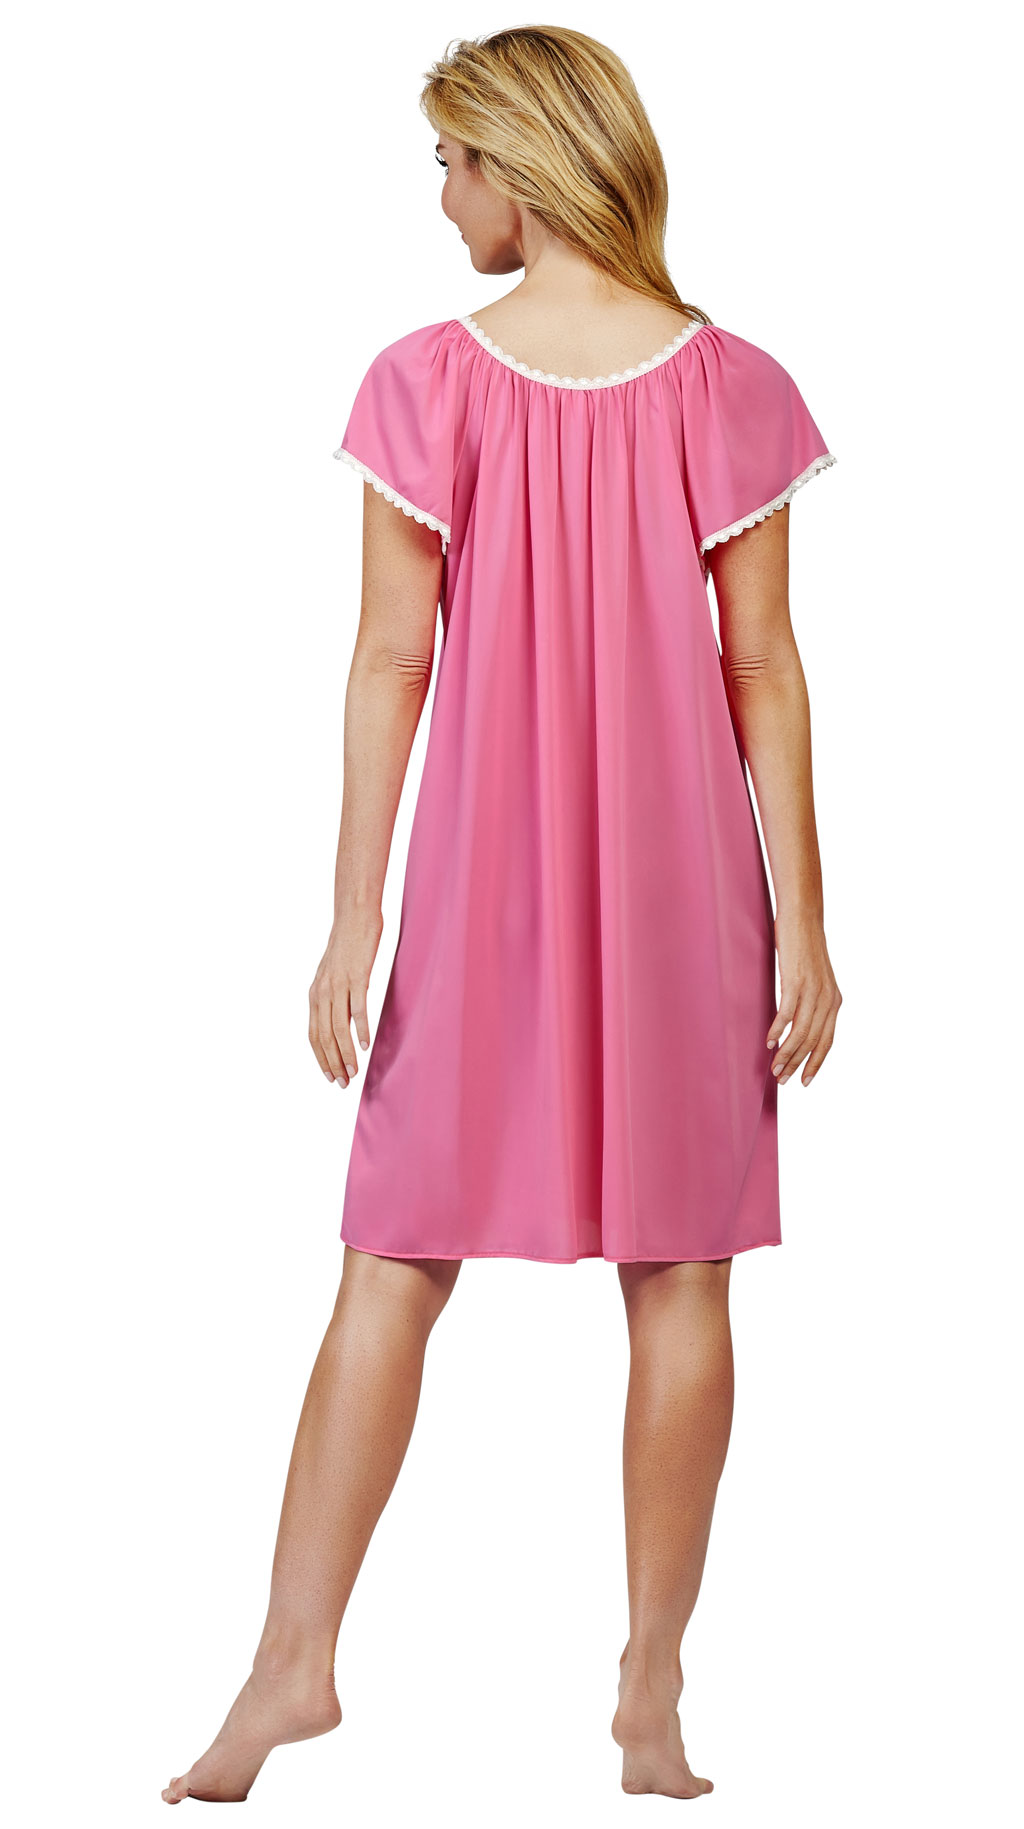 Women's Short Nylon Nightgowns | Short Nighty For Ladies